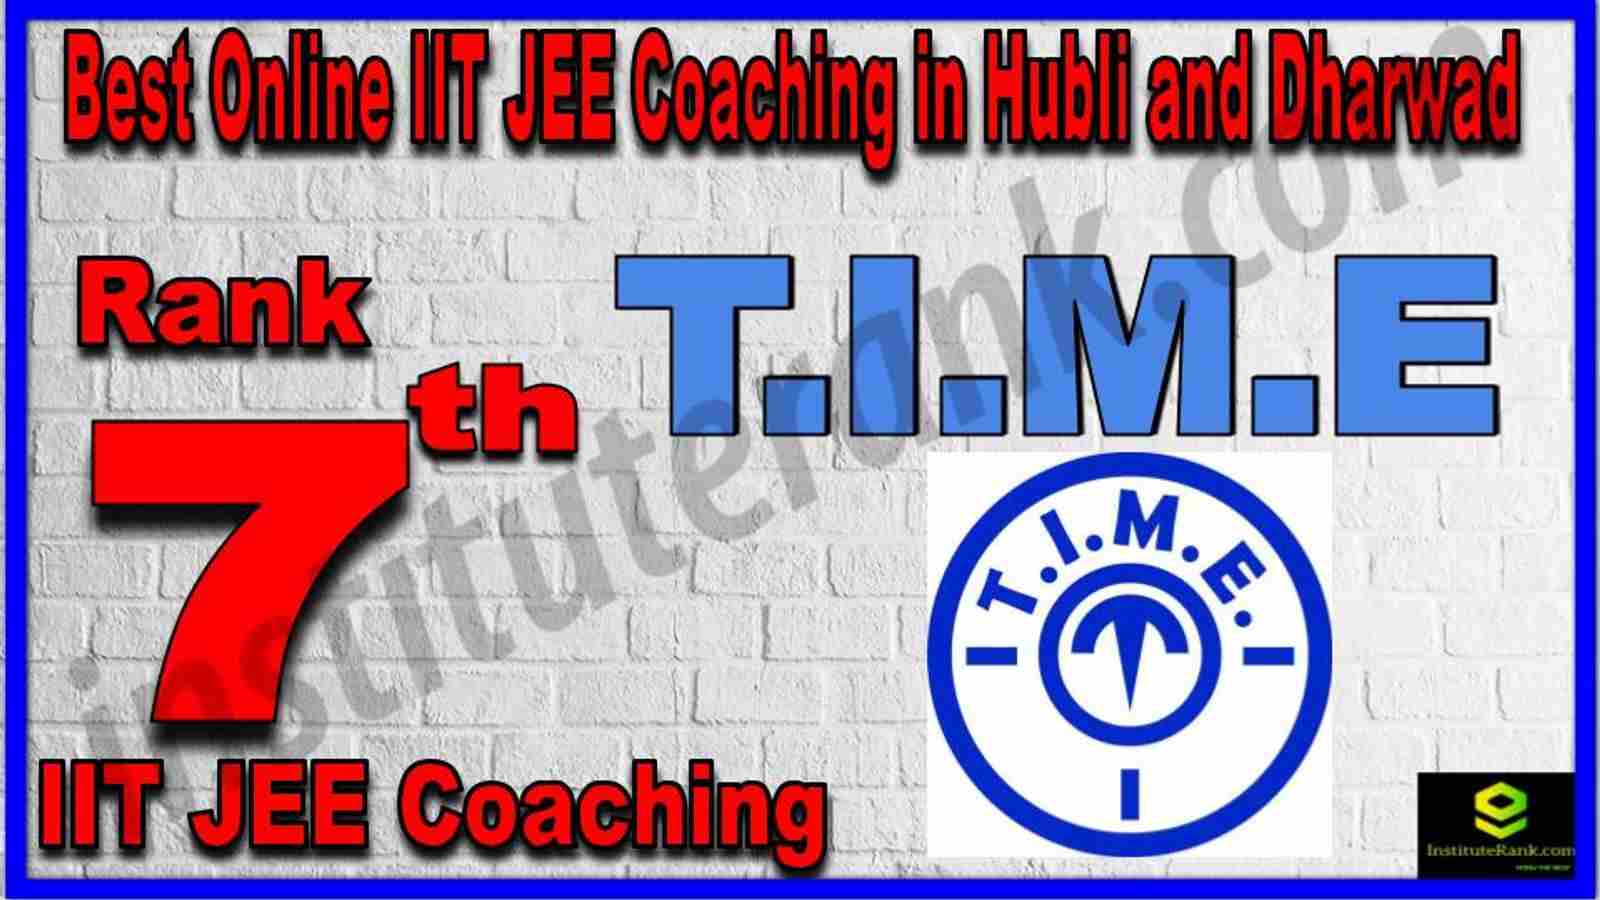 Rank 7th Best Online IIT JEE Coaching in Hubli and Dharwad